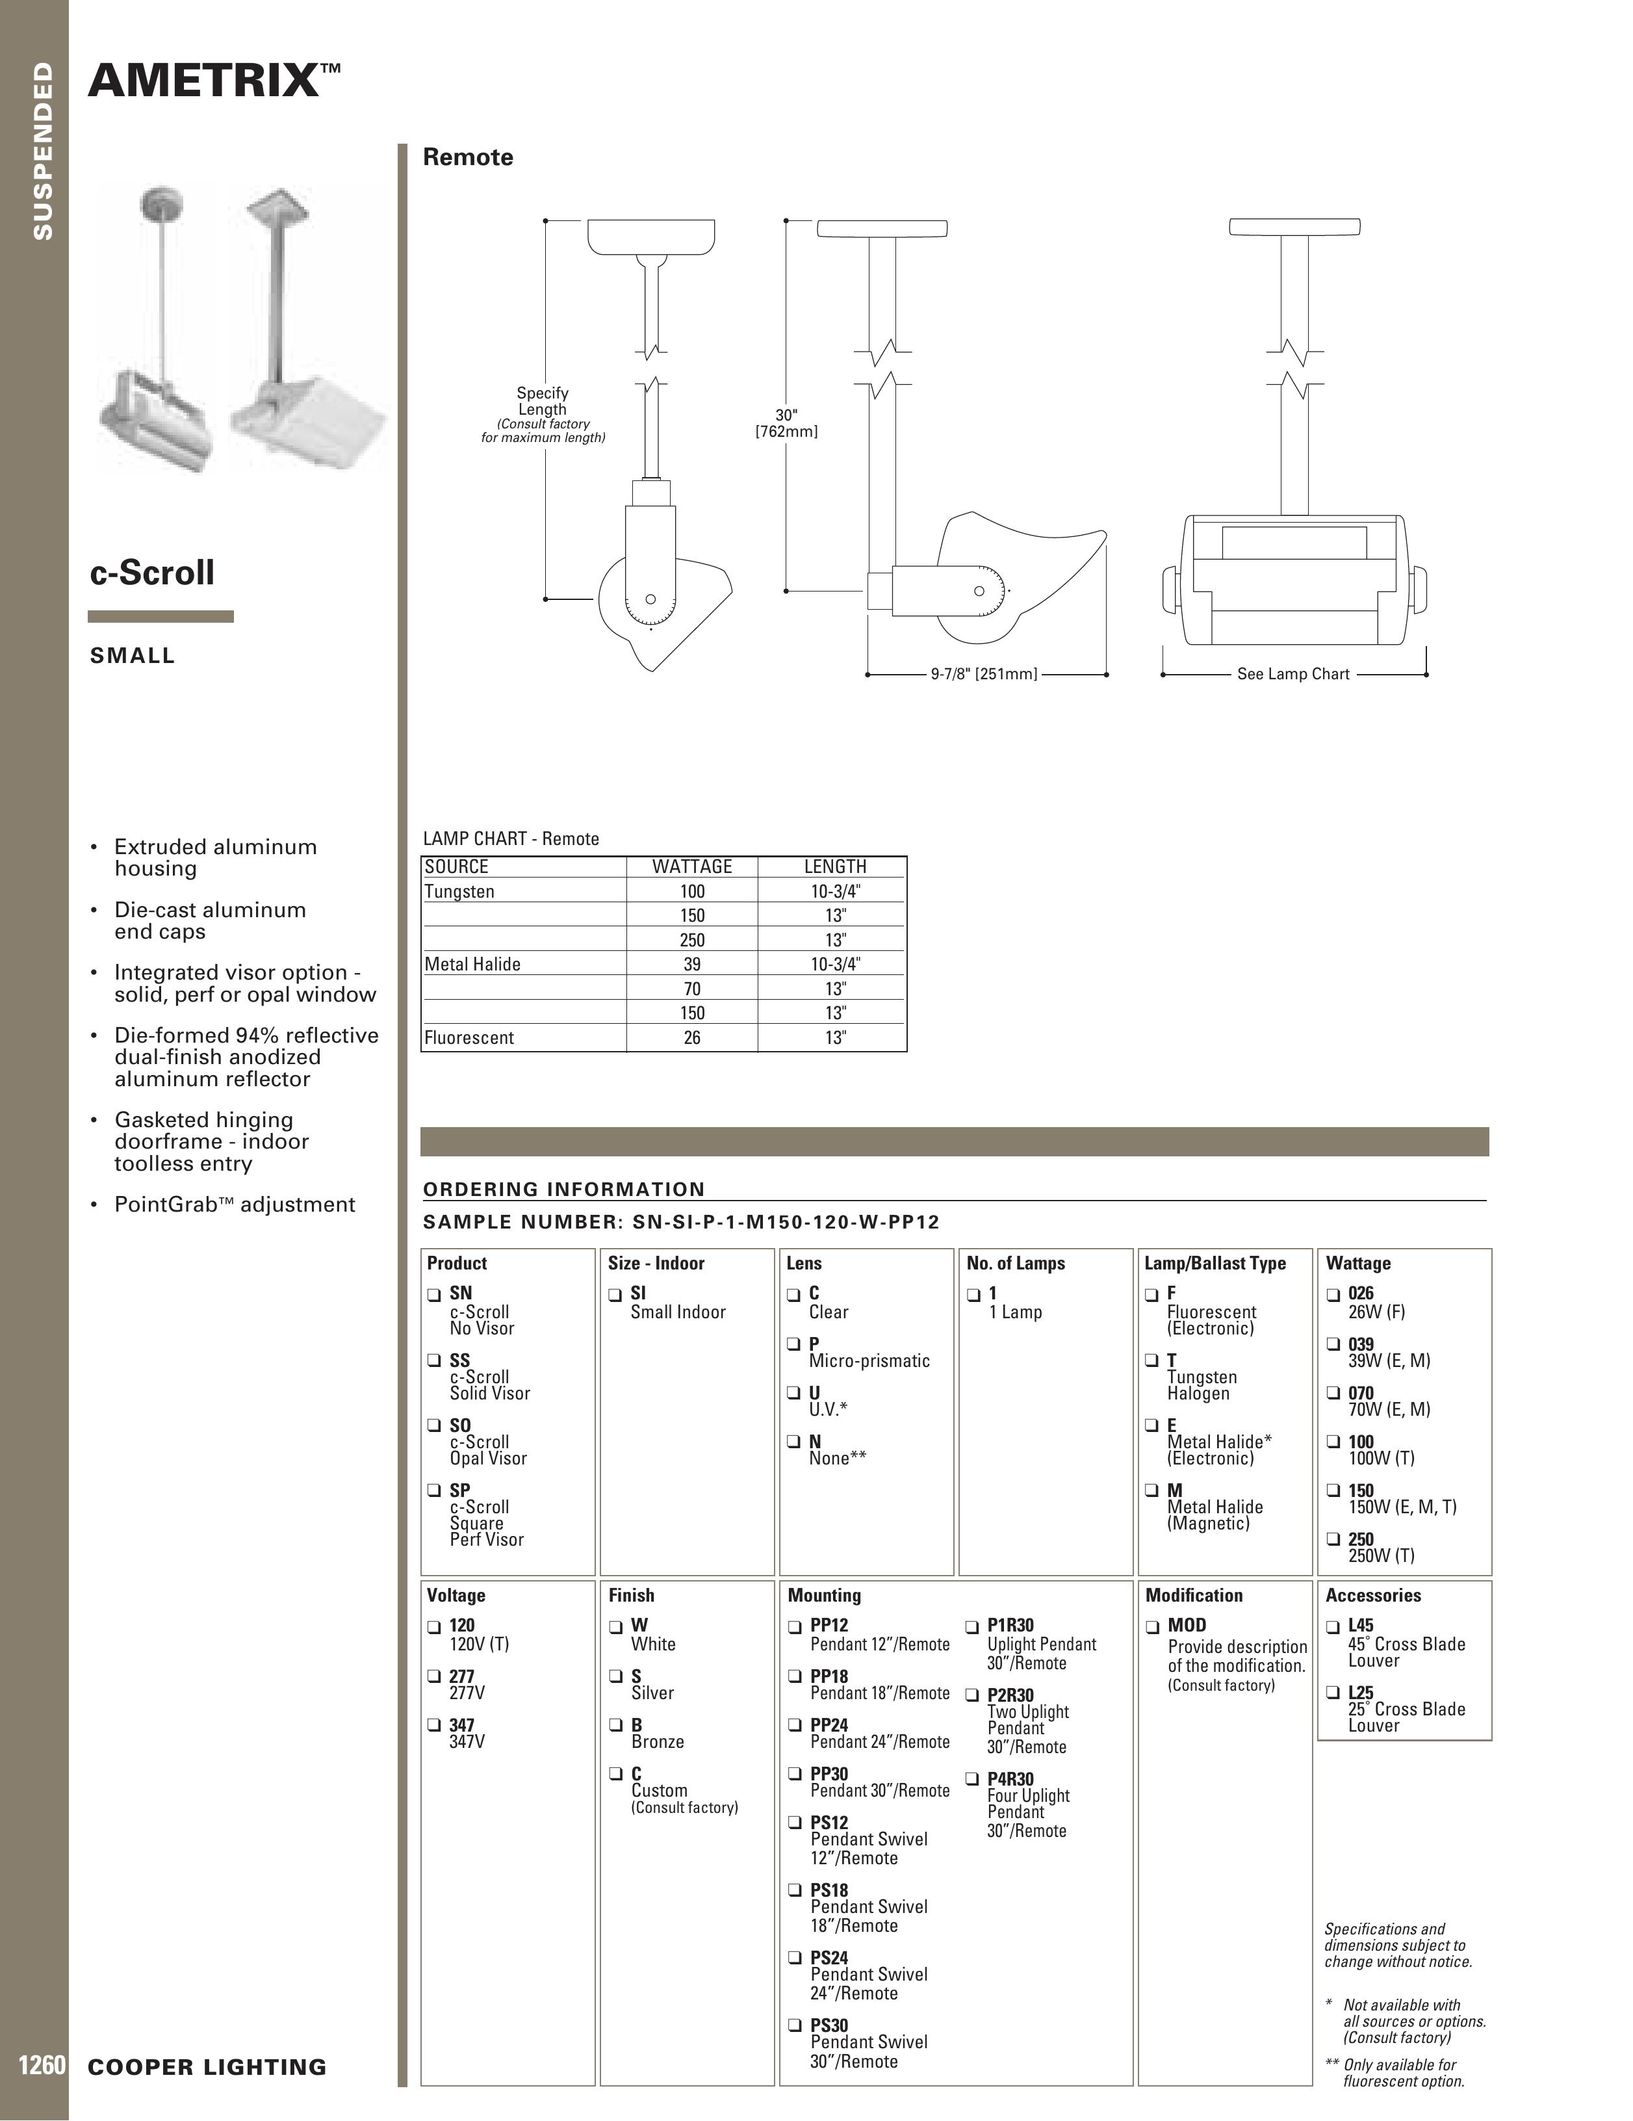 EdgeStar c-Scroll Indoor Furnishings User Manual